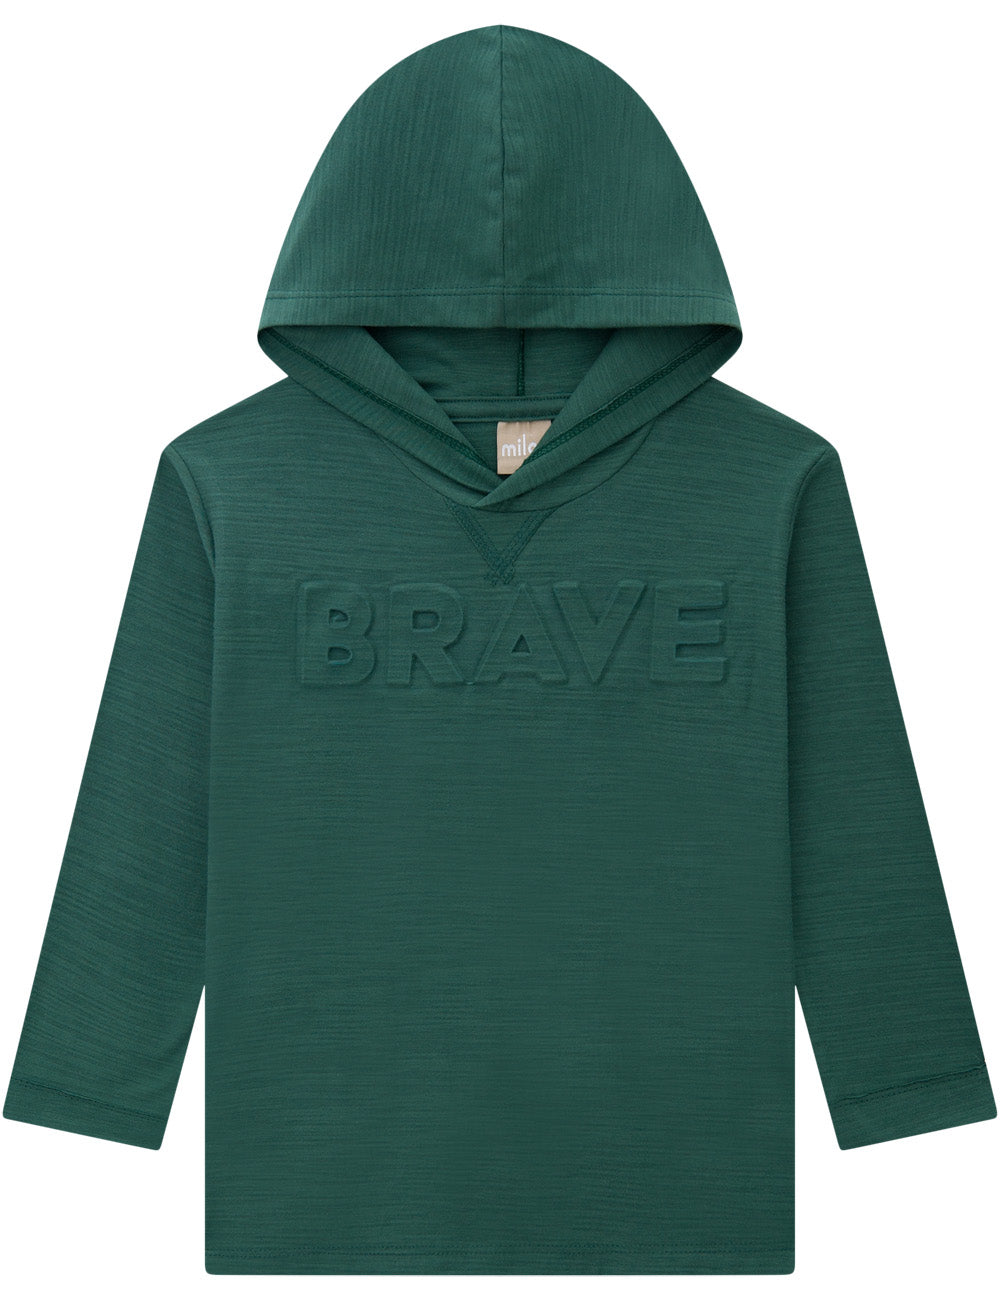 Brave Hoodie T-shirt by Milon